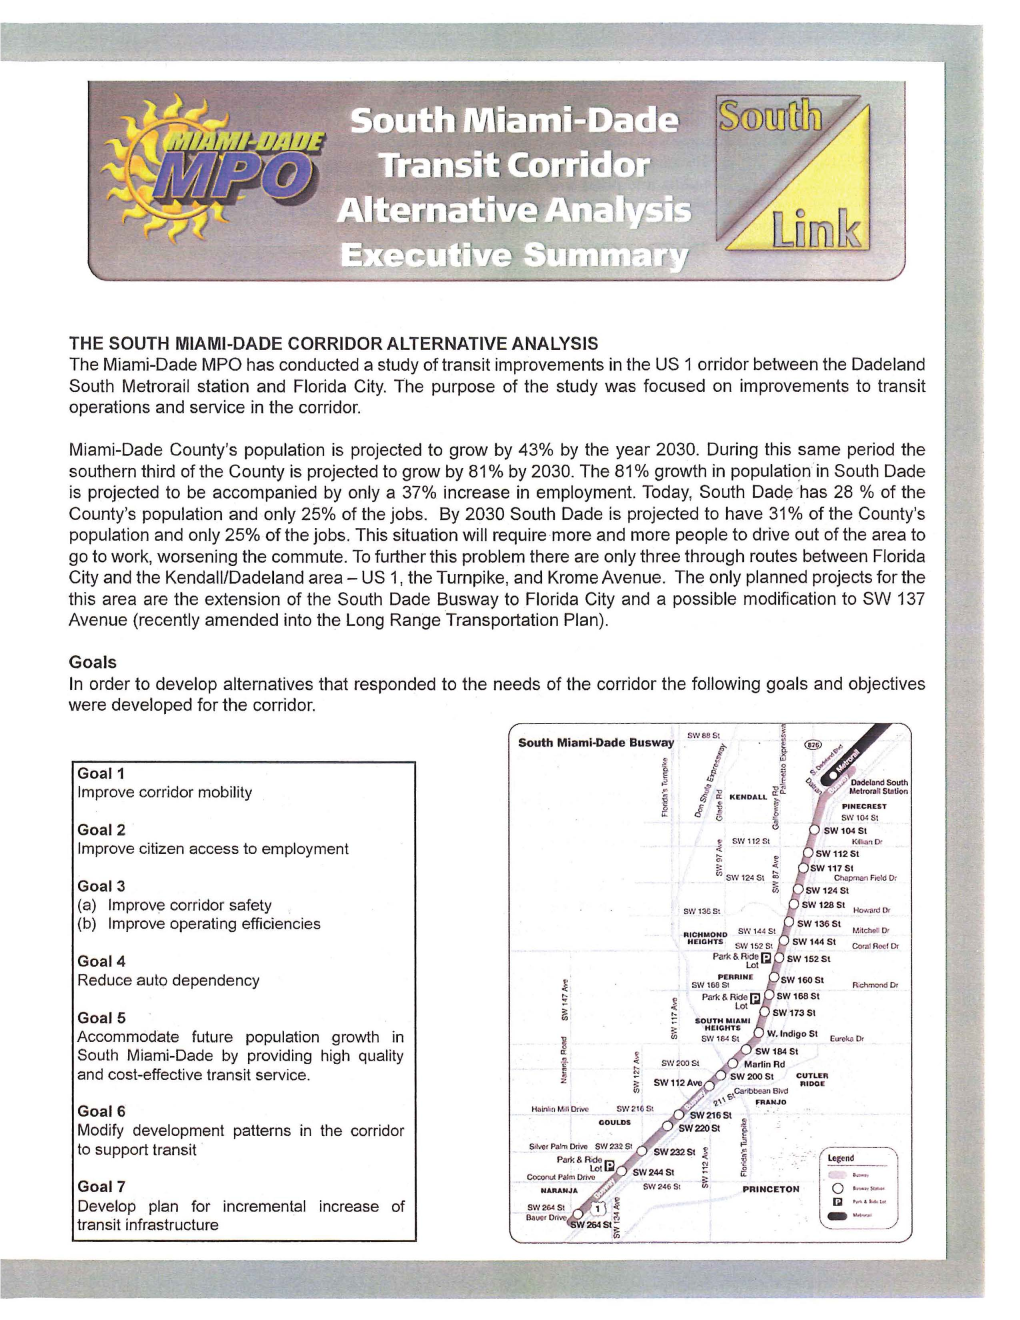 South Miami-Dade Transit Corridor Alternative Analysis Executive